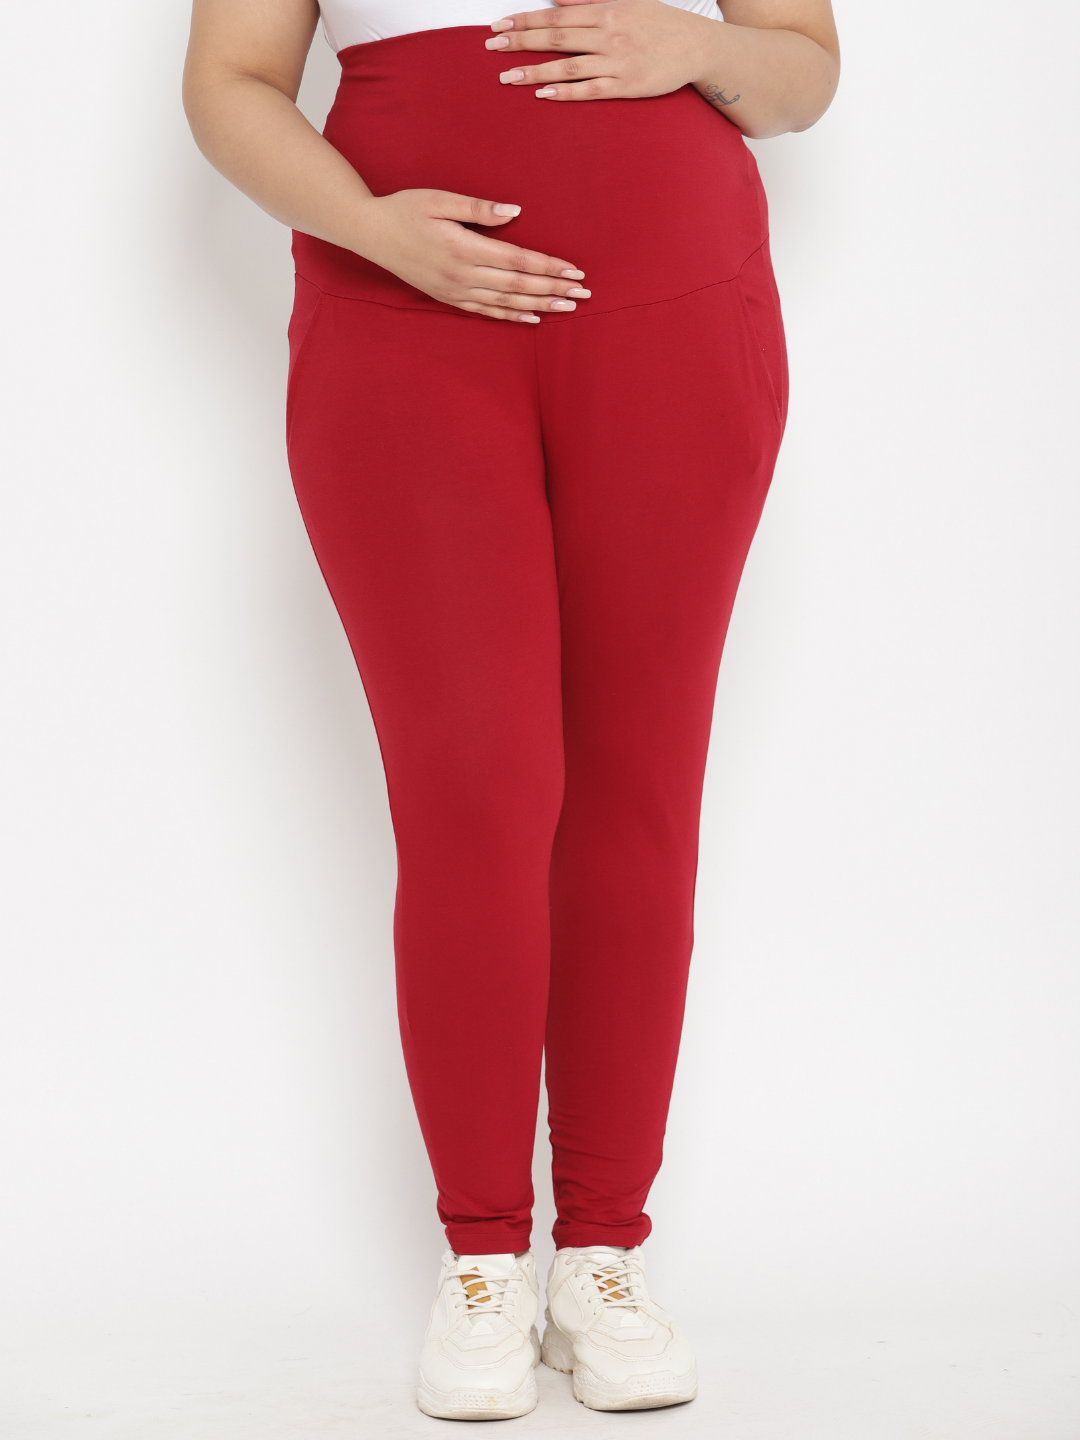 Plus Size Pregnancy Leggings - Red